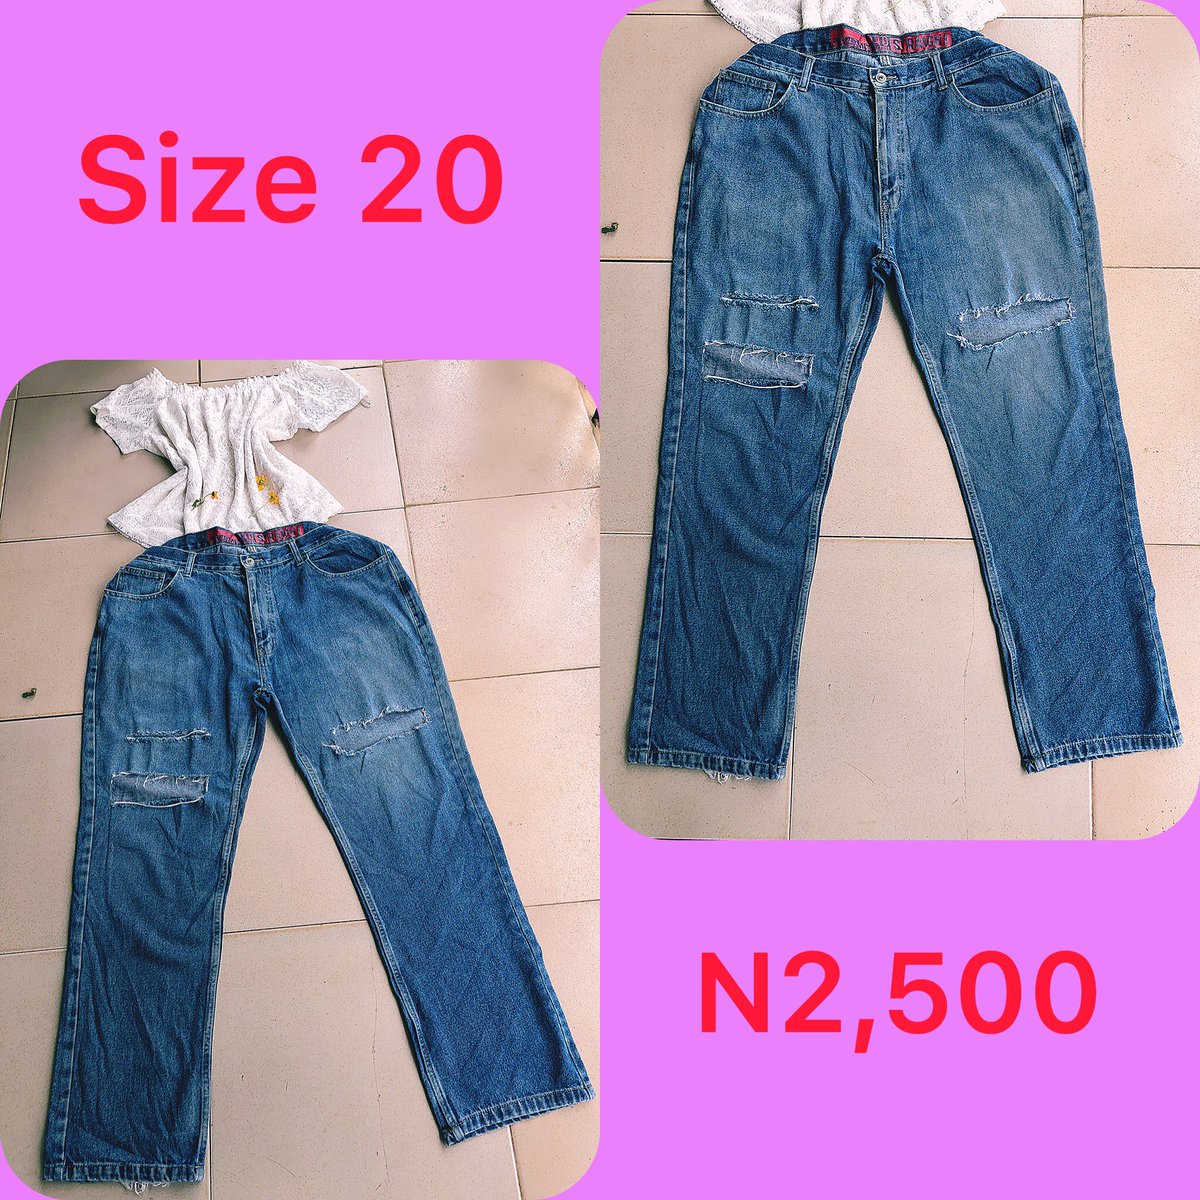 Slide 1: ripped skinny jeans      Size 10/12, N2,500Slide 2: Dungerees        Size 10, Price: N3,000Slide 3: bf jeans       Size 10/12, Price: N2,000Slide 4: bf jeans       Size 20, Price N2,500